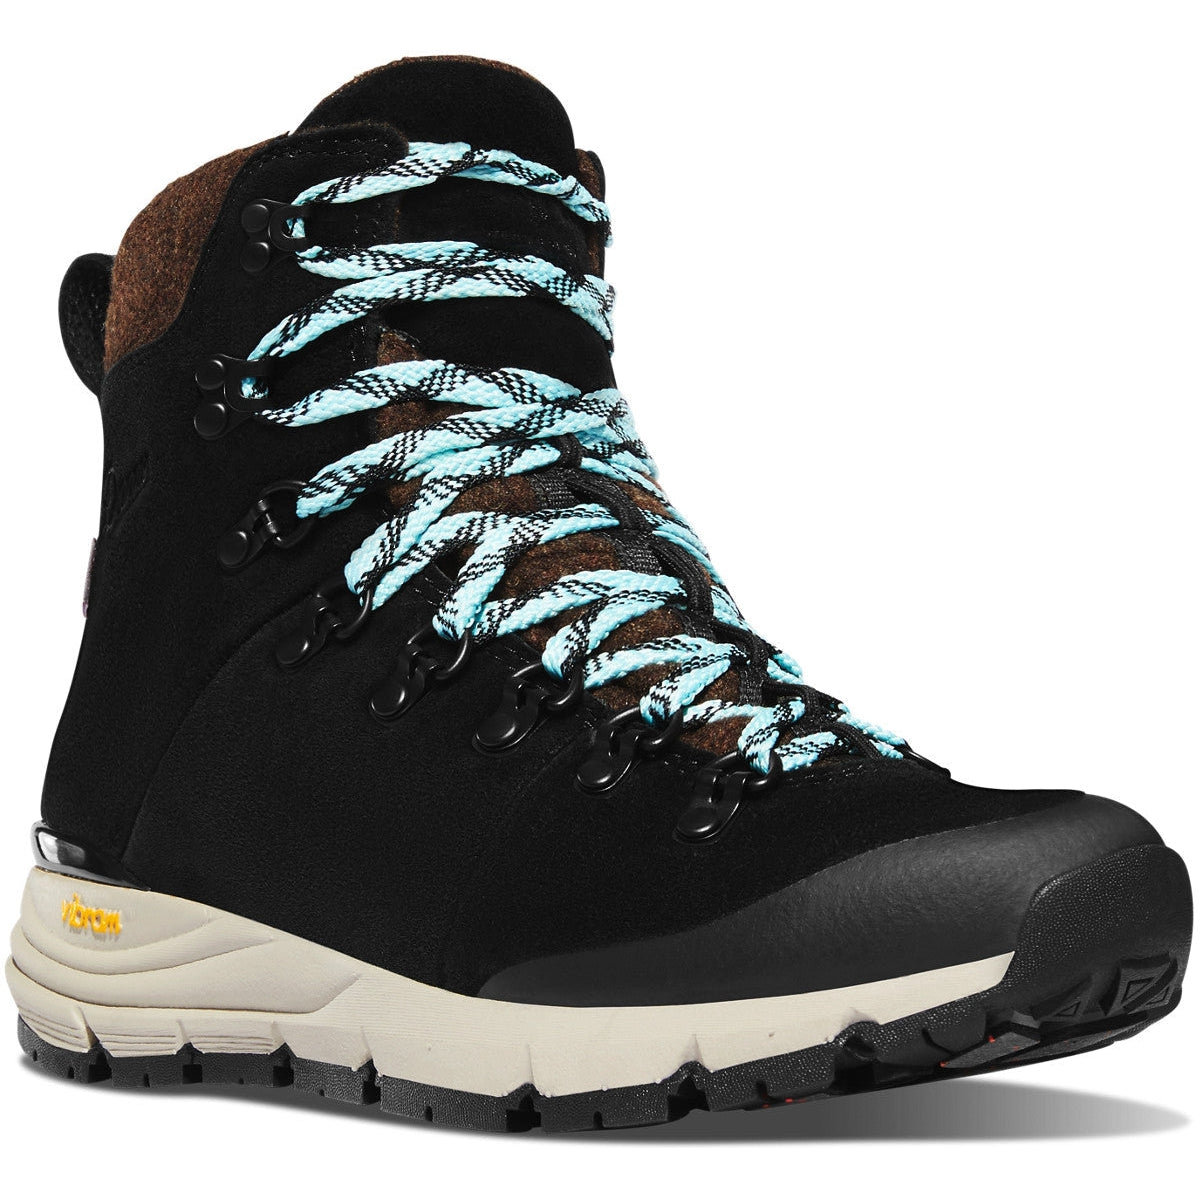 Danner Women's Arctic 600 7" WP Hiking Boot - Black/Spark Blue - 67340  - Overlook Boots